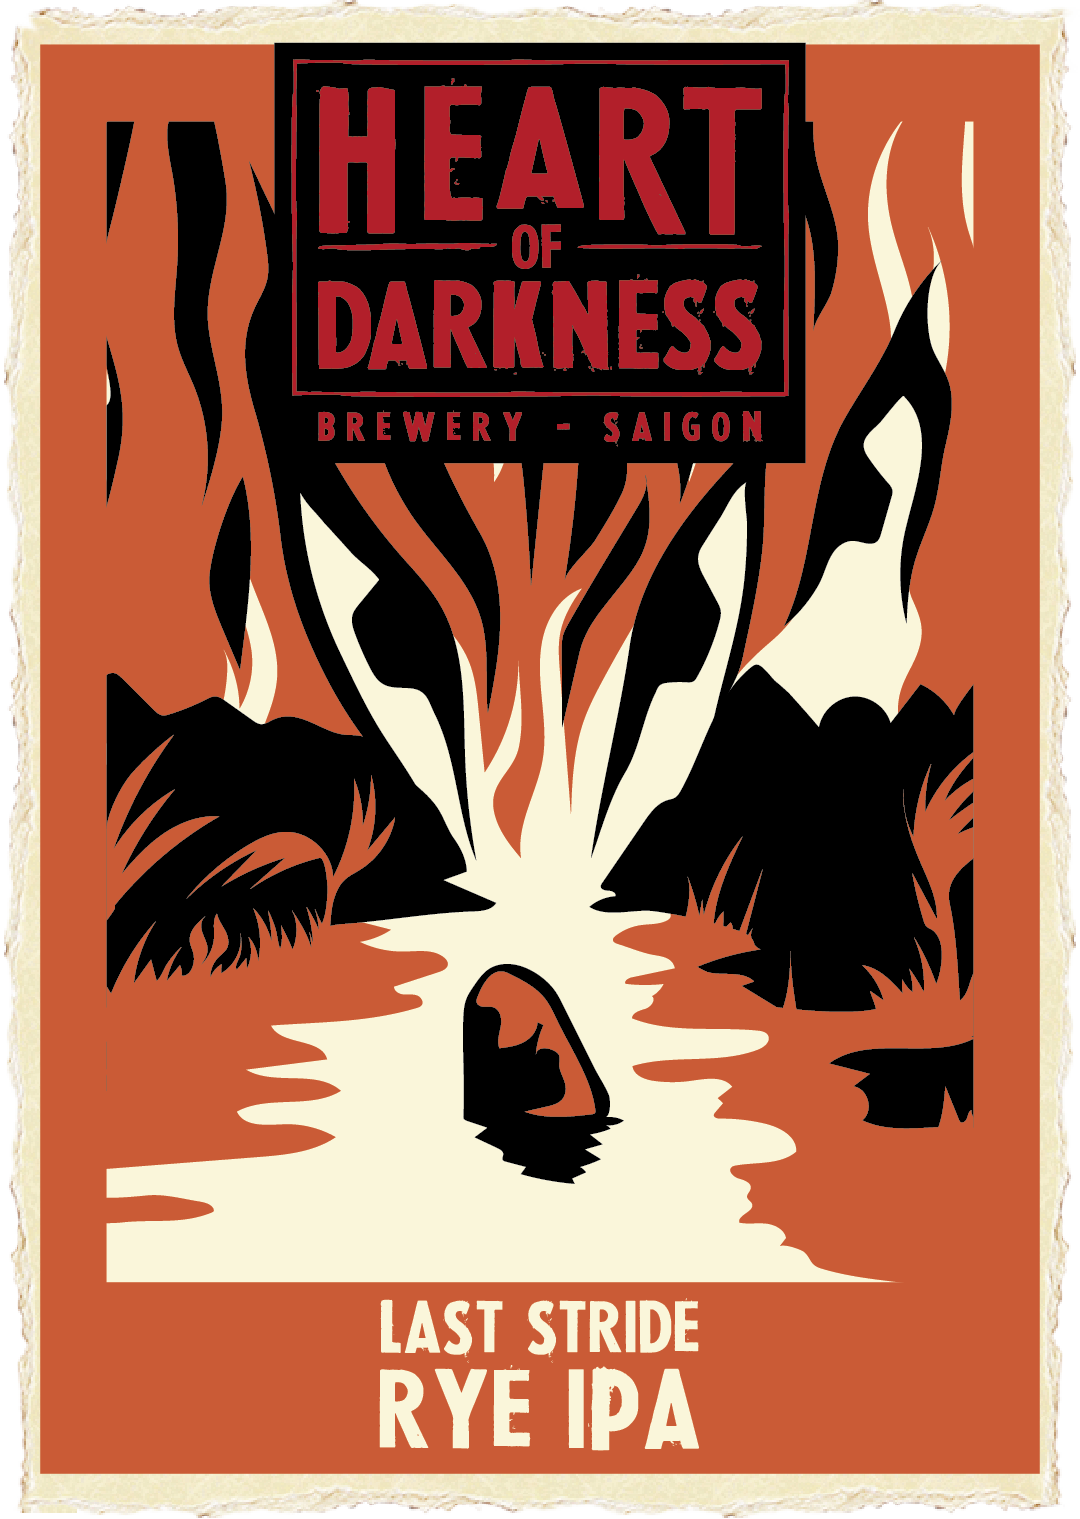 Last Stride Rye IPA Heart of Darkness Craft Brewery